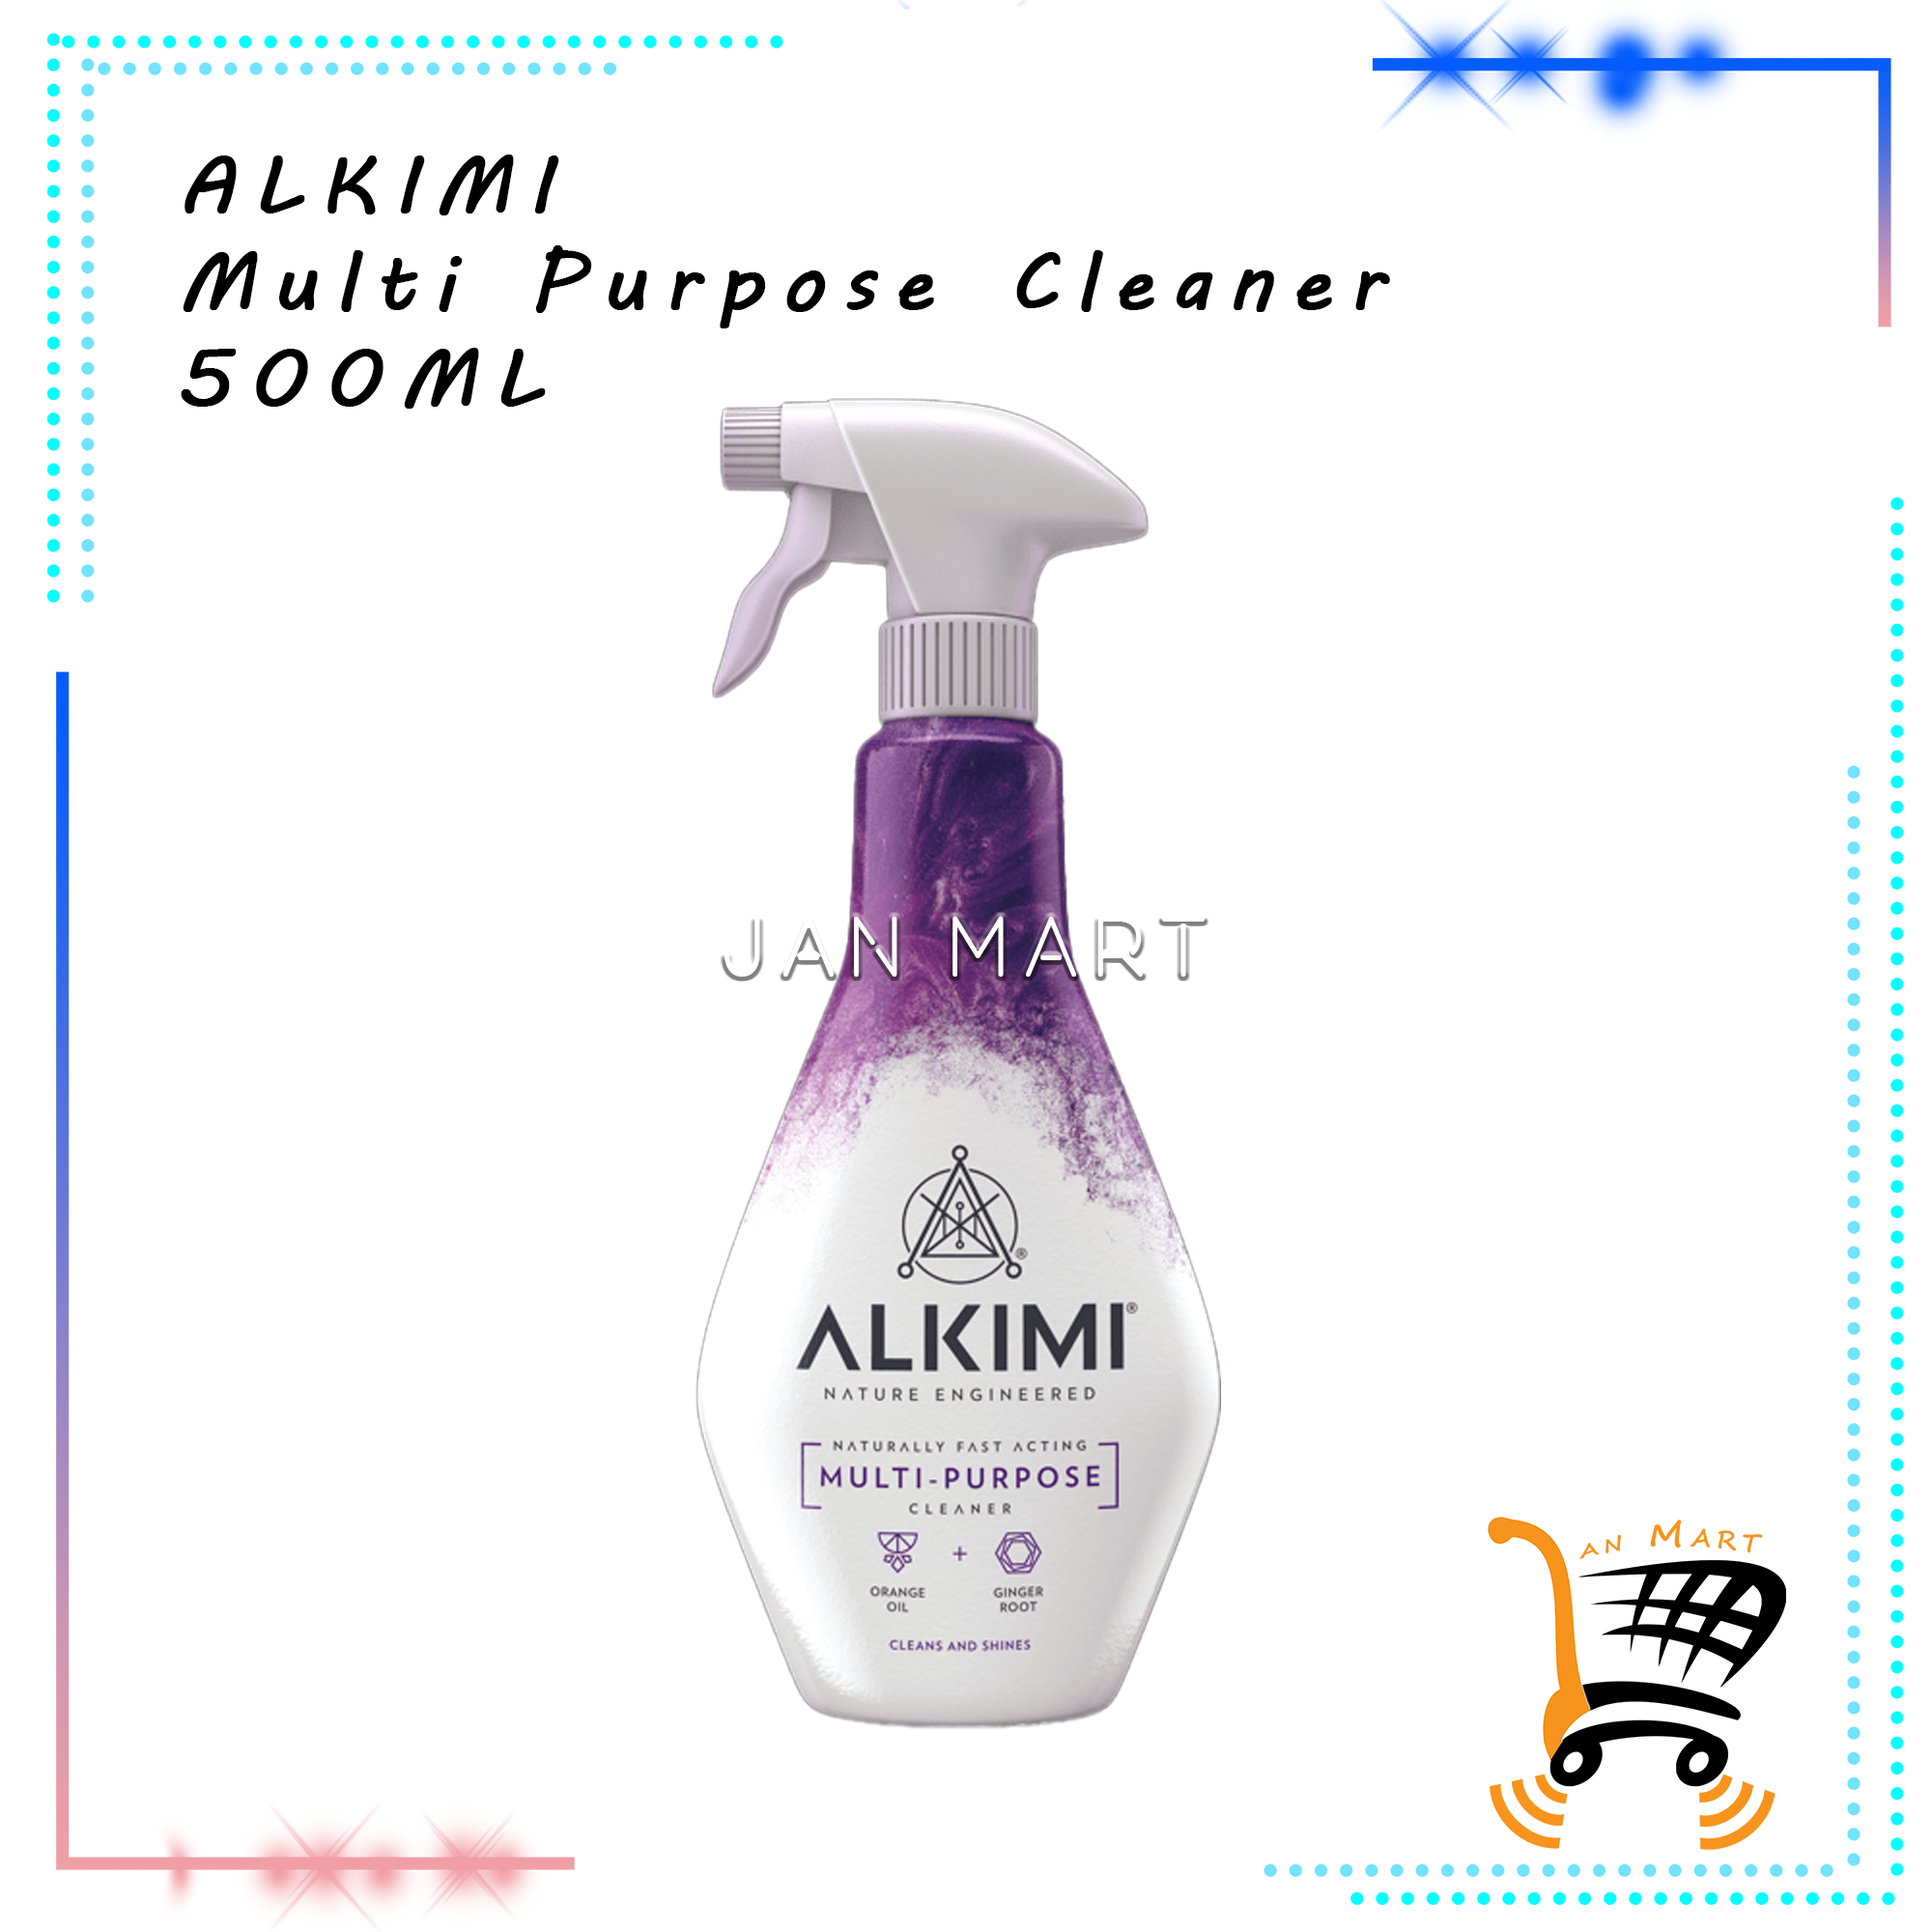 ALKIMI Multi-Purpose Cleaner 500ML